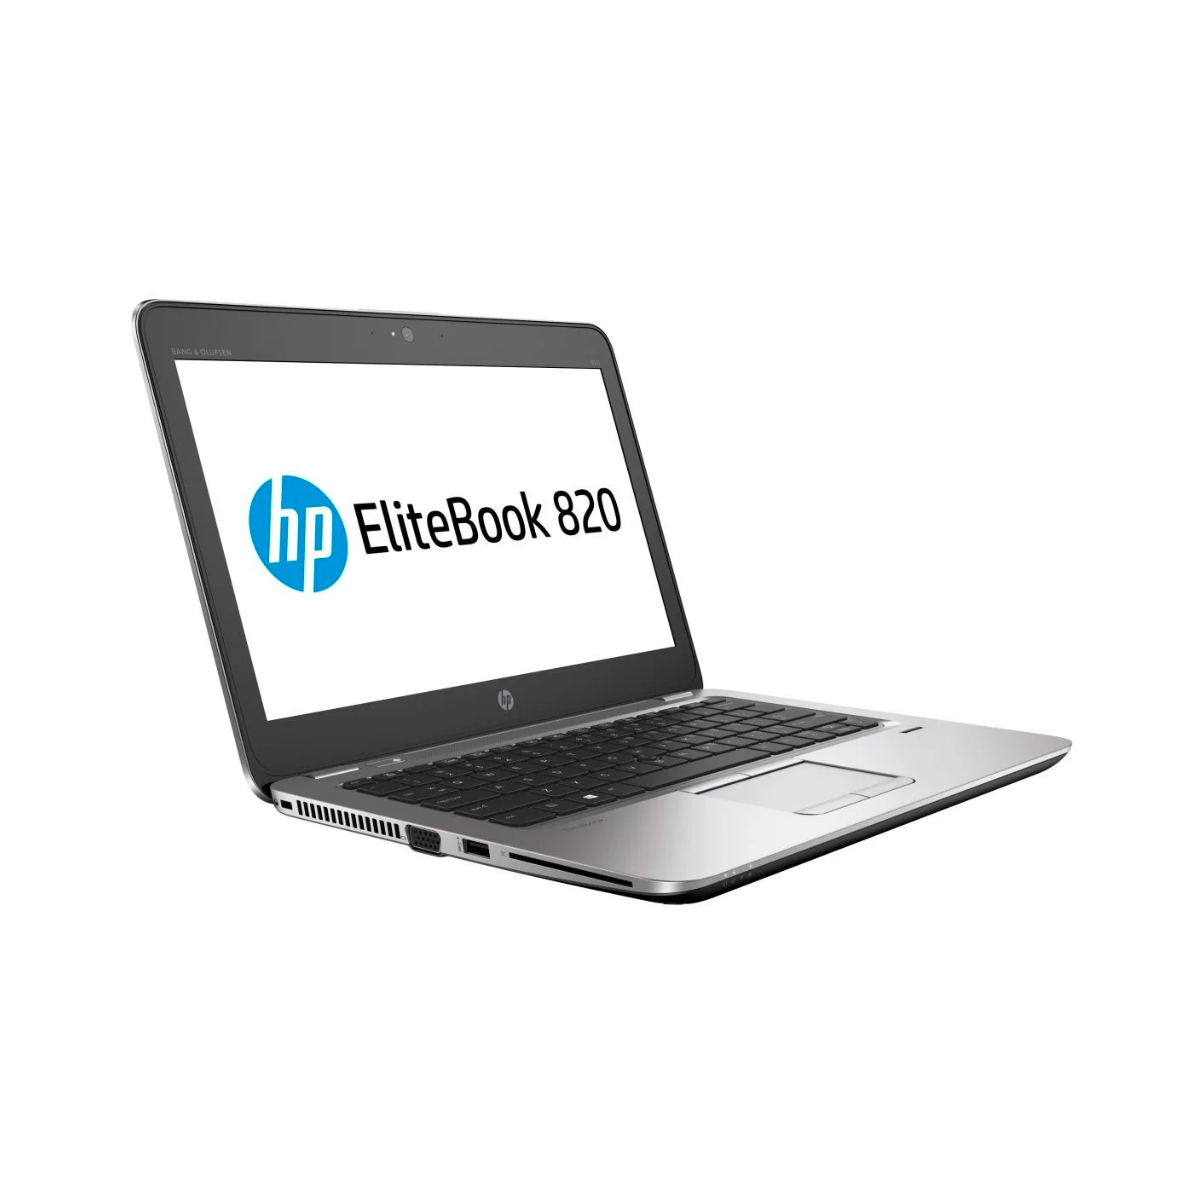 HP EliteBook 820 G3 i5 (6th Gen) 8GB 256GB SSD 12.5